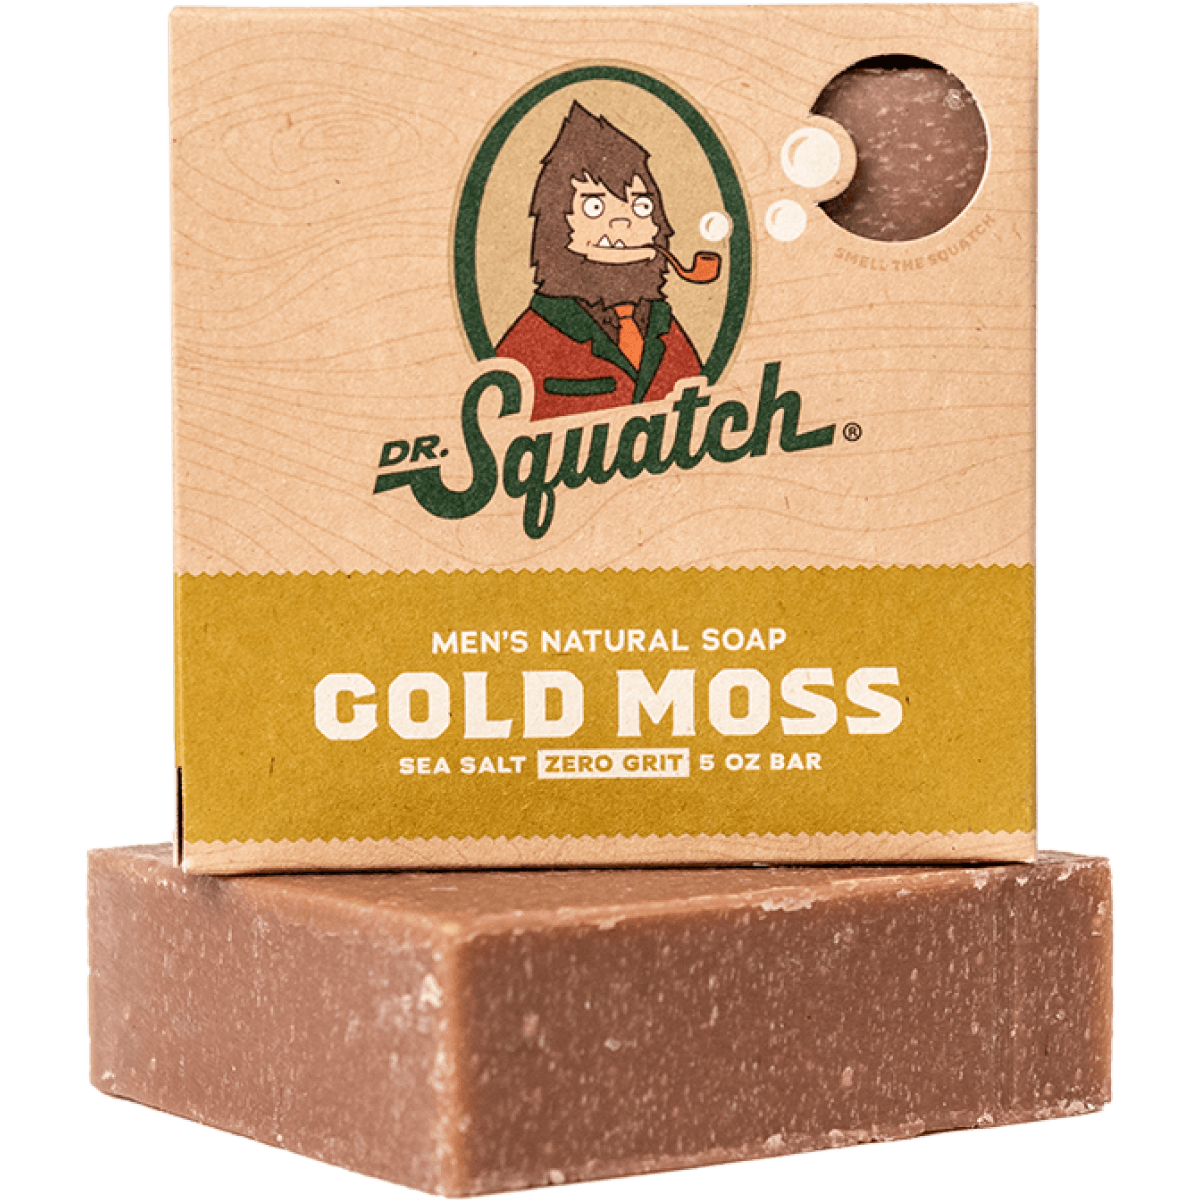 Dr. Squatch Gold Moss Natural Soap